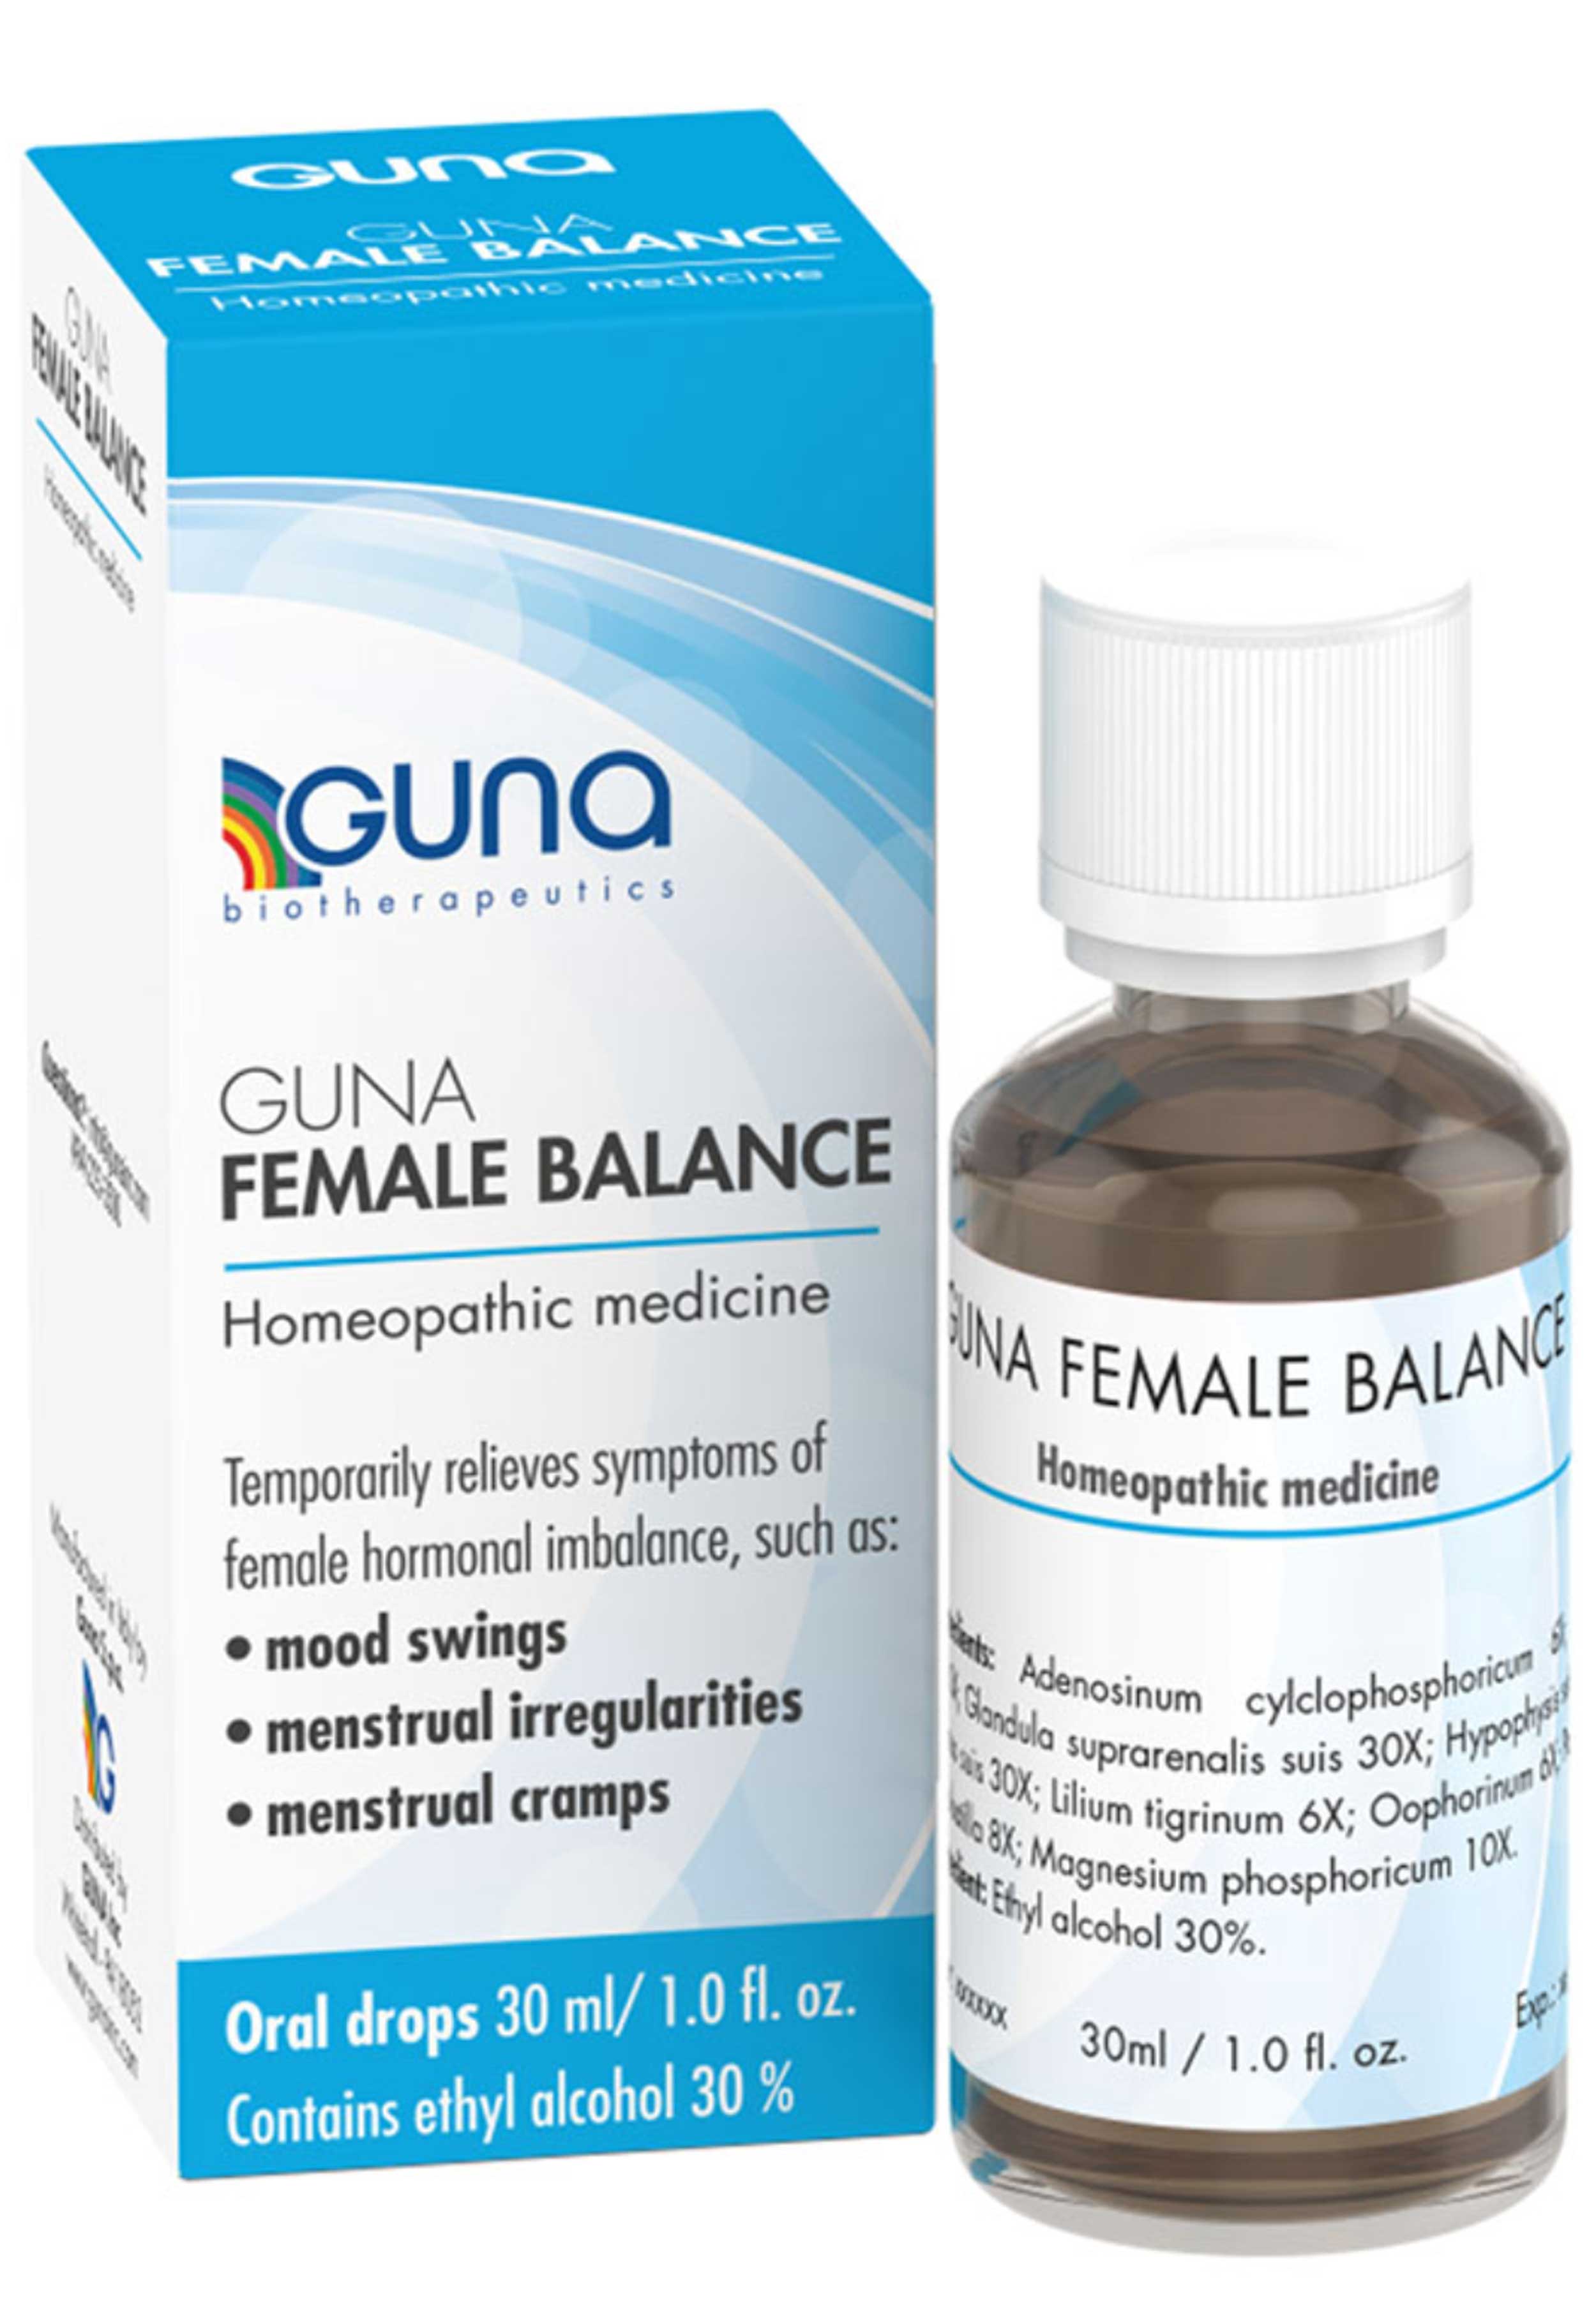 GUNA Biotherapeutics GUNA Female Balance